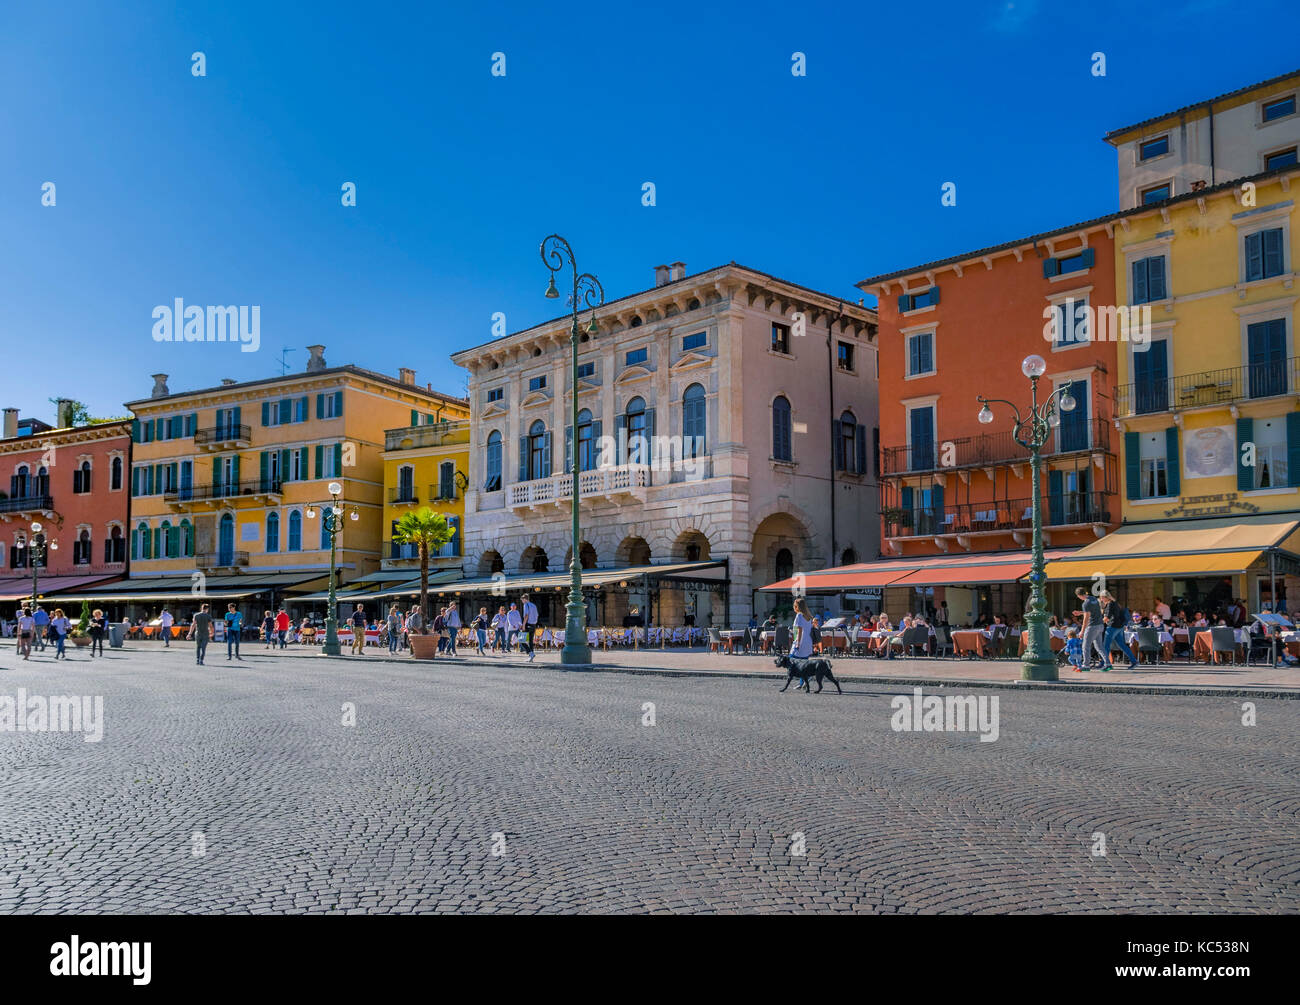 Restaurants on the Piazza Bra Square, Verona, Venice, Italy, Europe Stock Photo